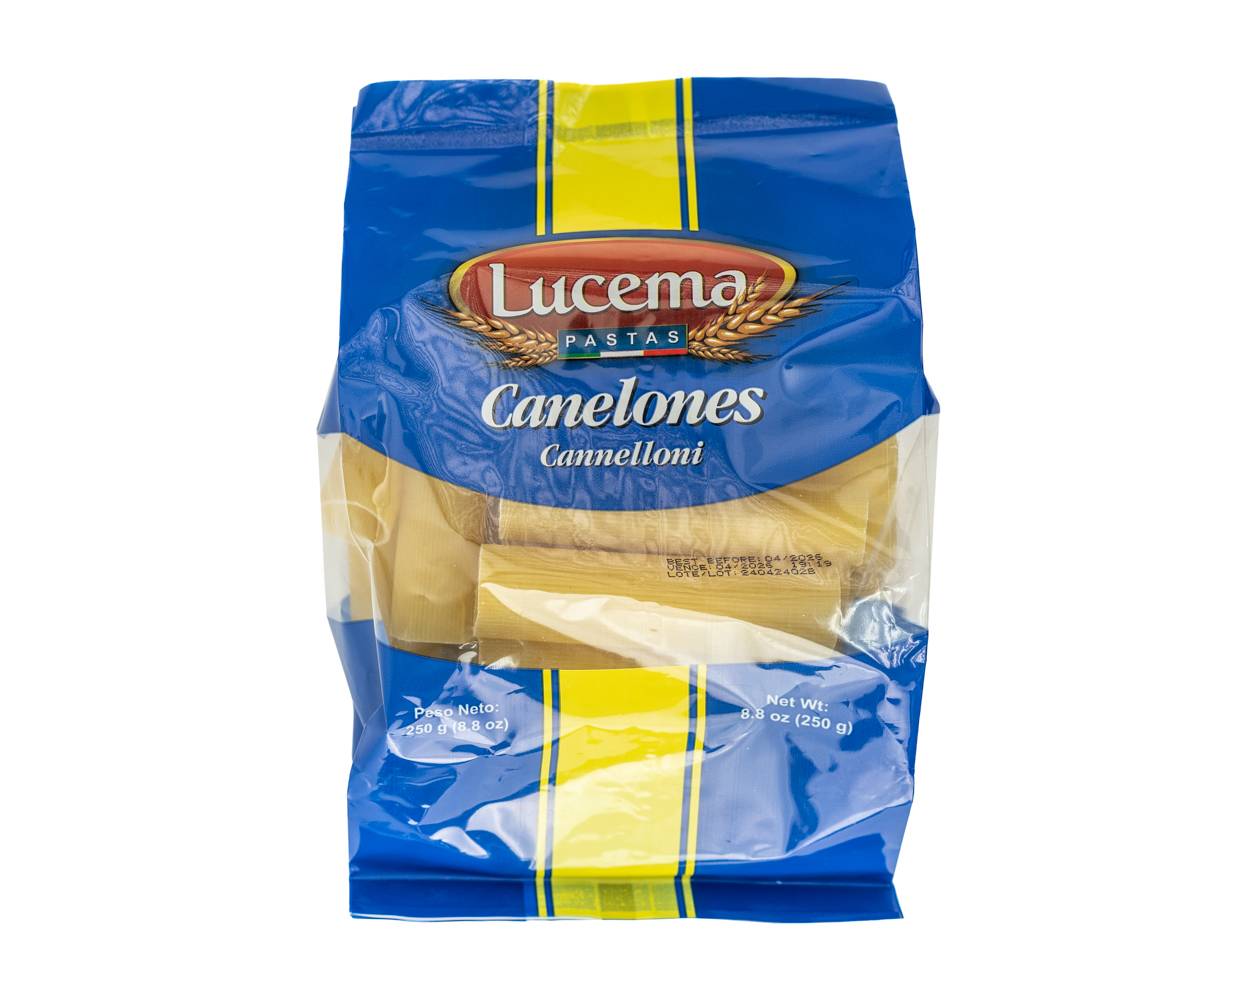 Lucema pasta canelones (bolsa 250 g)